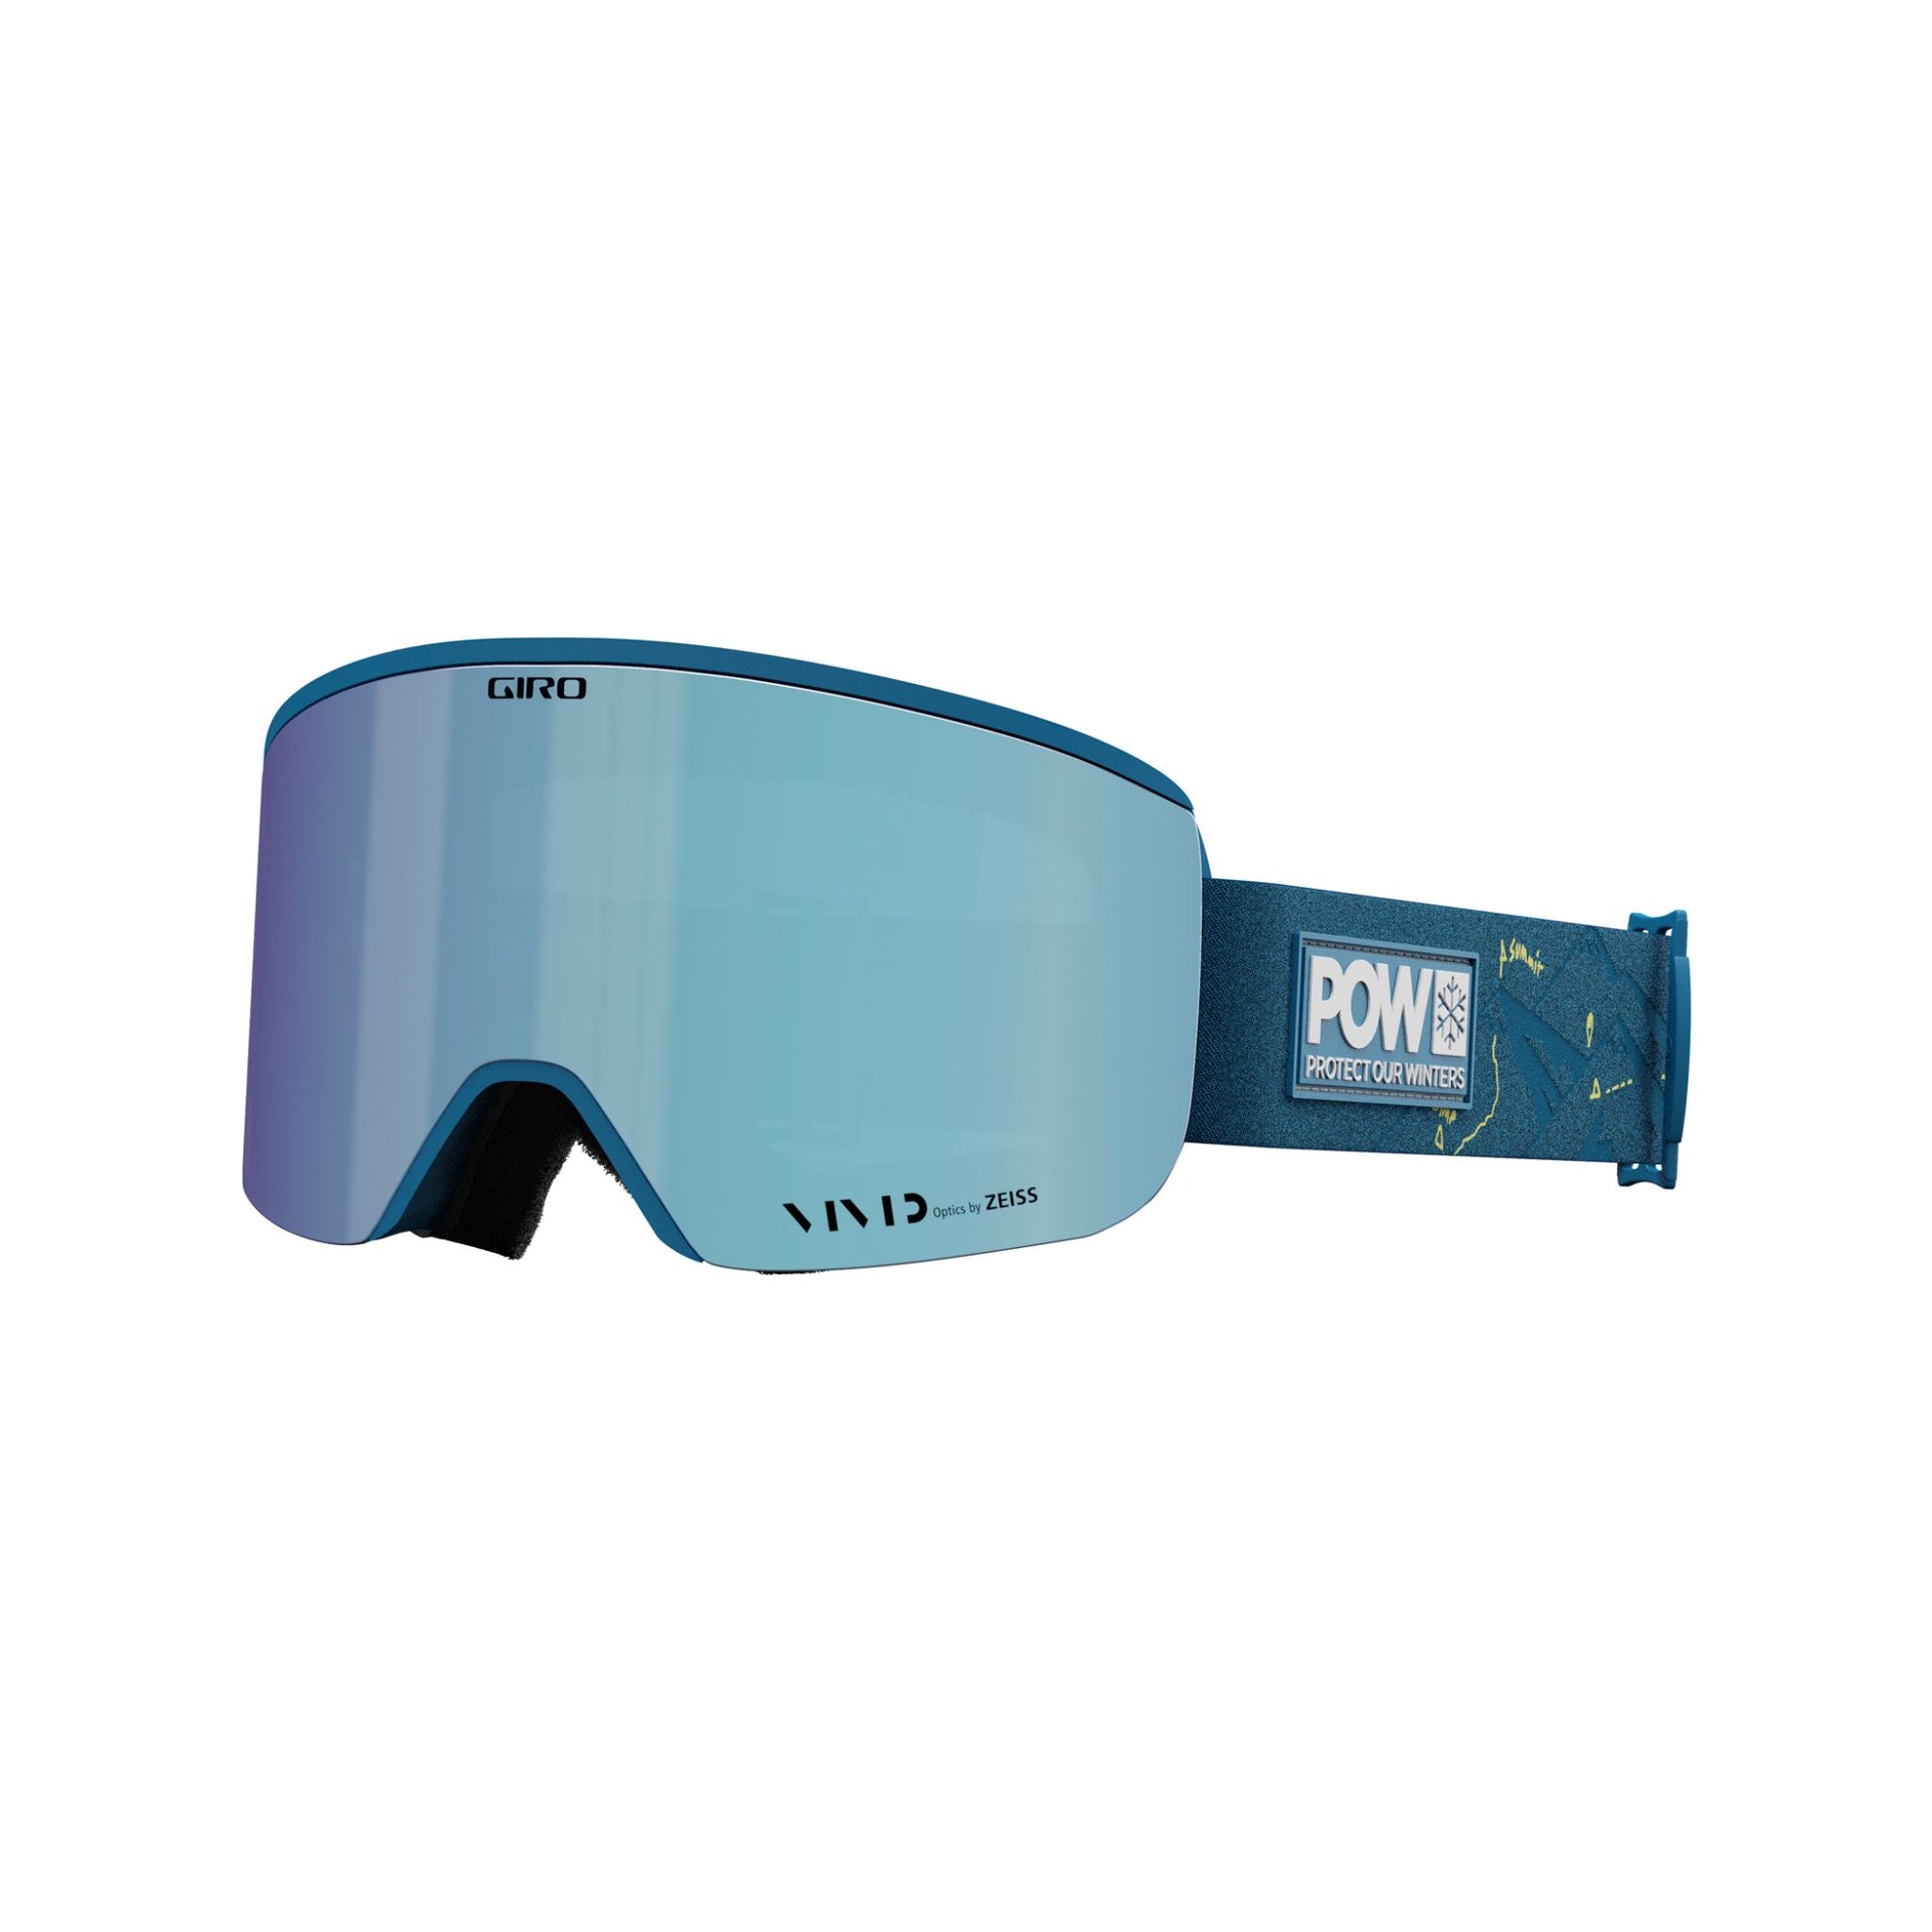 Mens Giro Axis (Medium Fit) Goggles - Protect Our Winters Vivid Royal Goggles Giro 